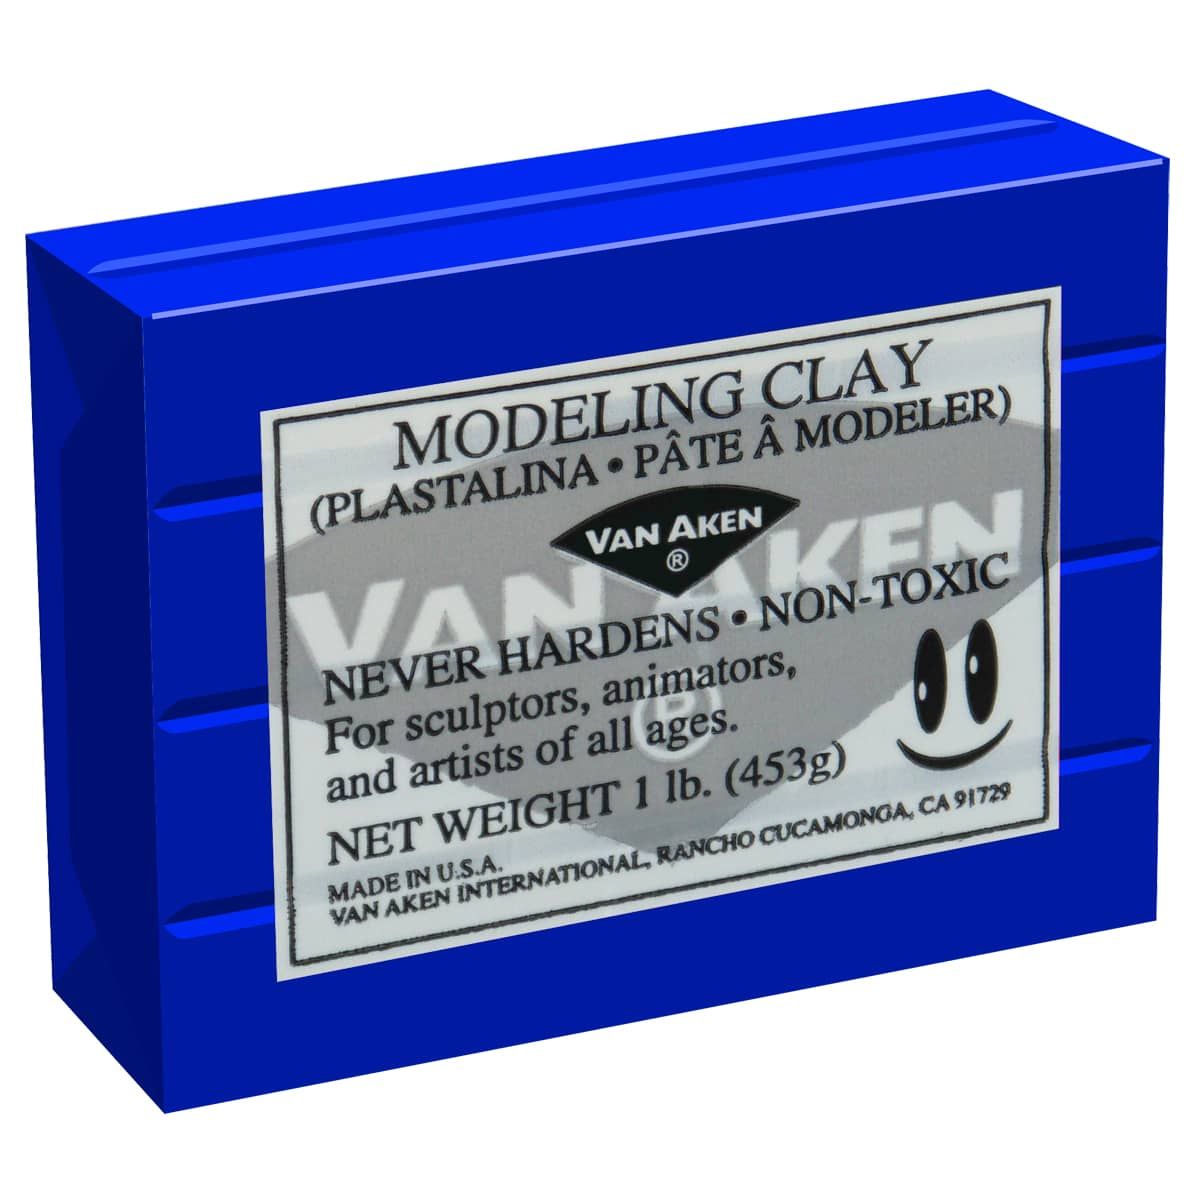 Van Aken Plastalina Modeling Clay - 4.5 lb, Blue